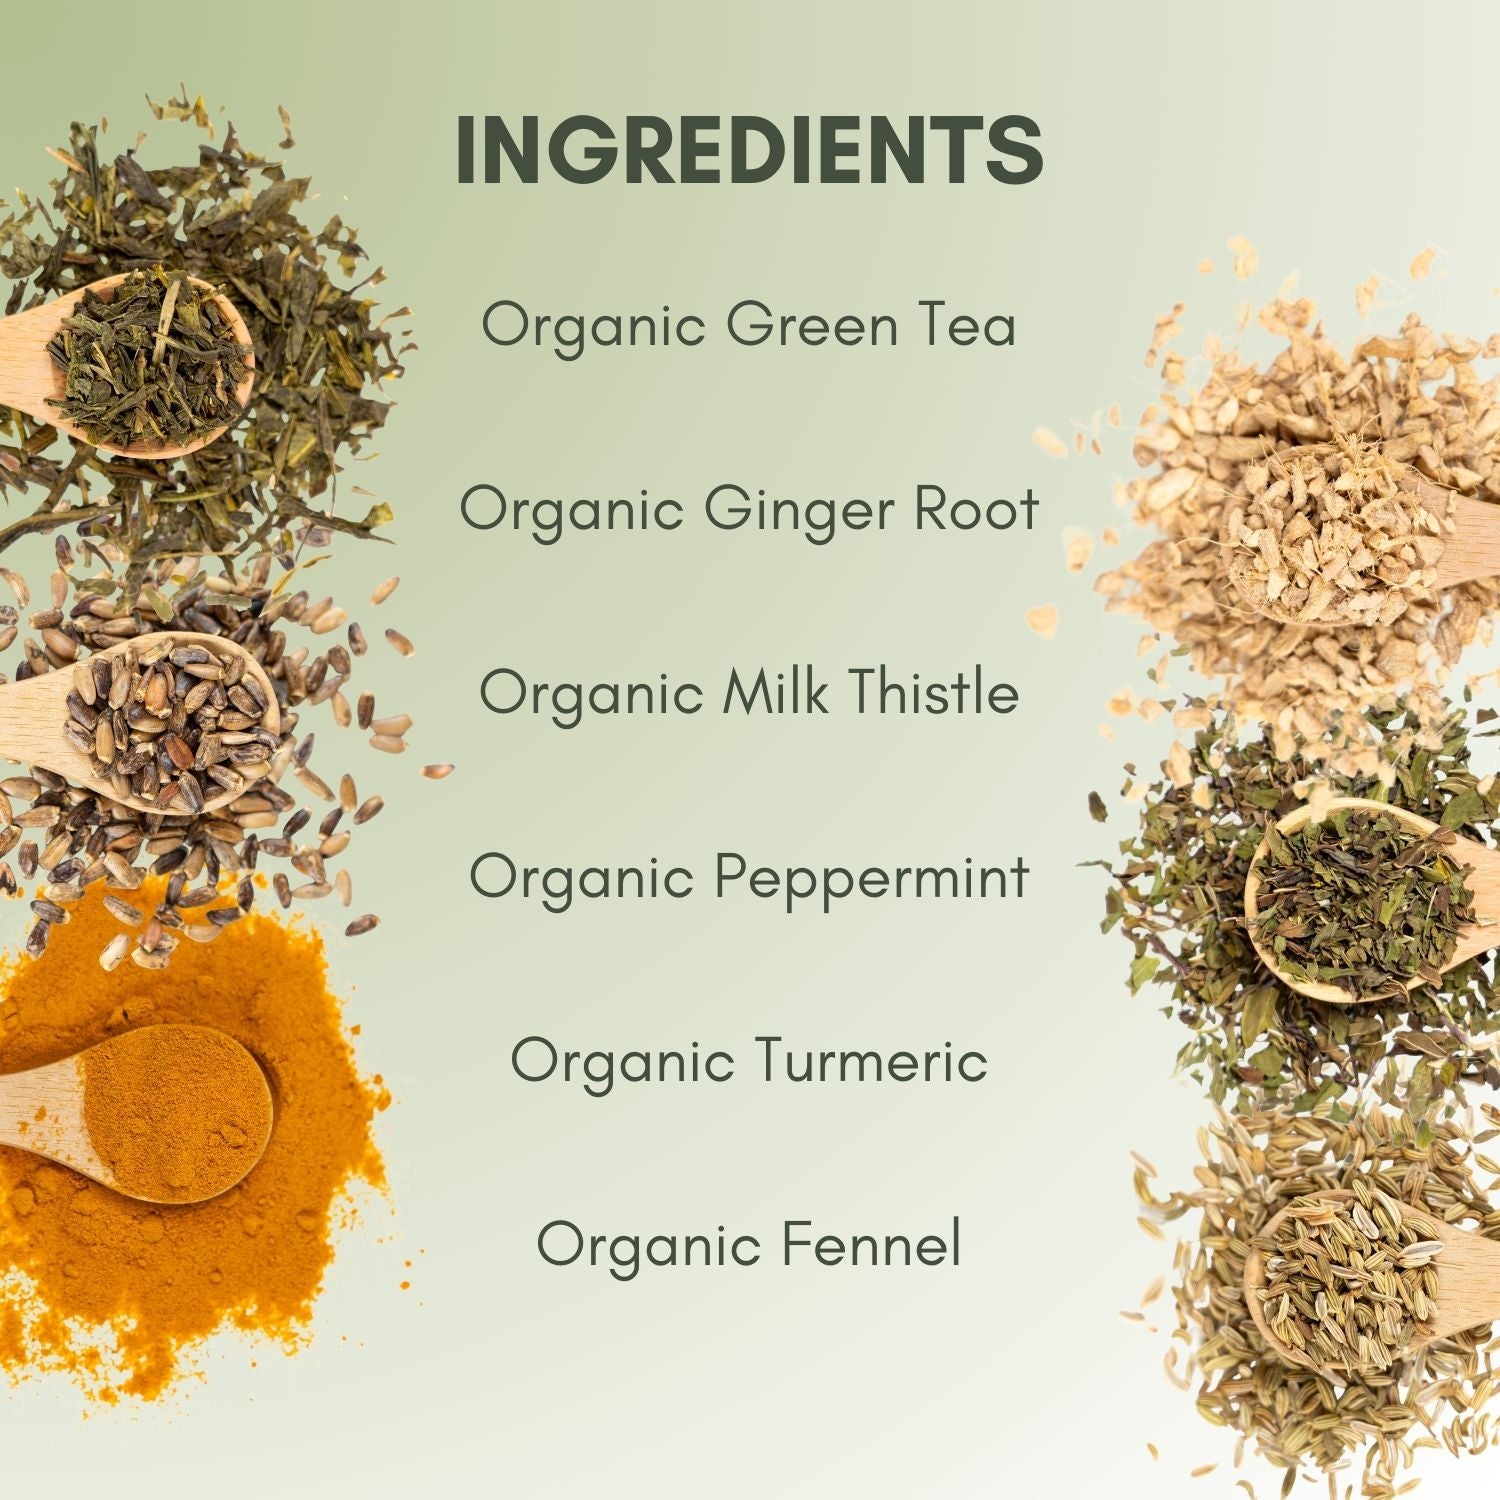 Organic Hangover Relief Tea - Premium Wellness